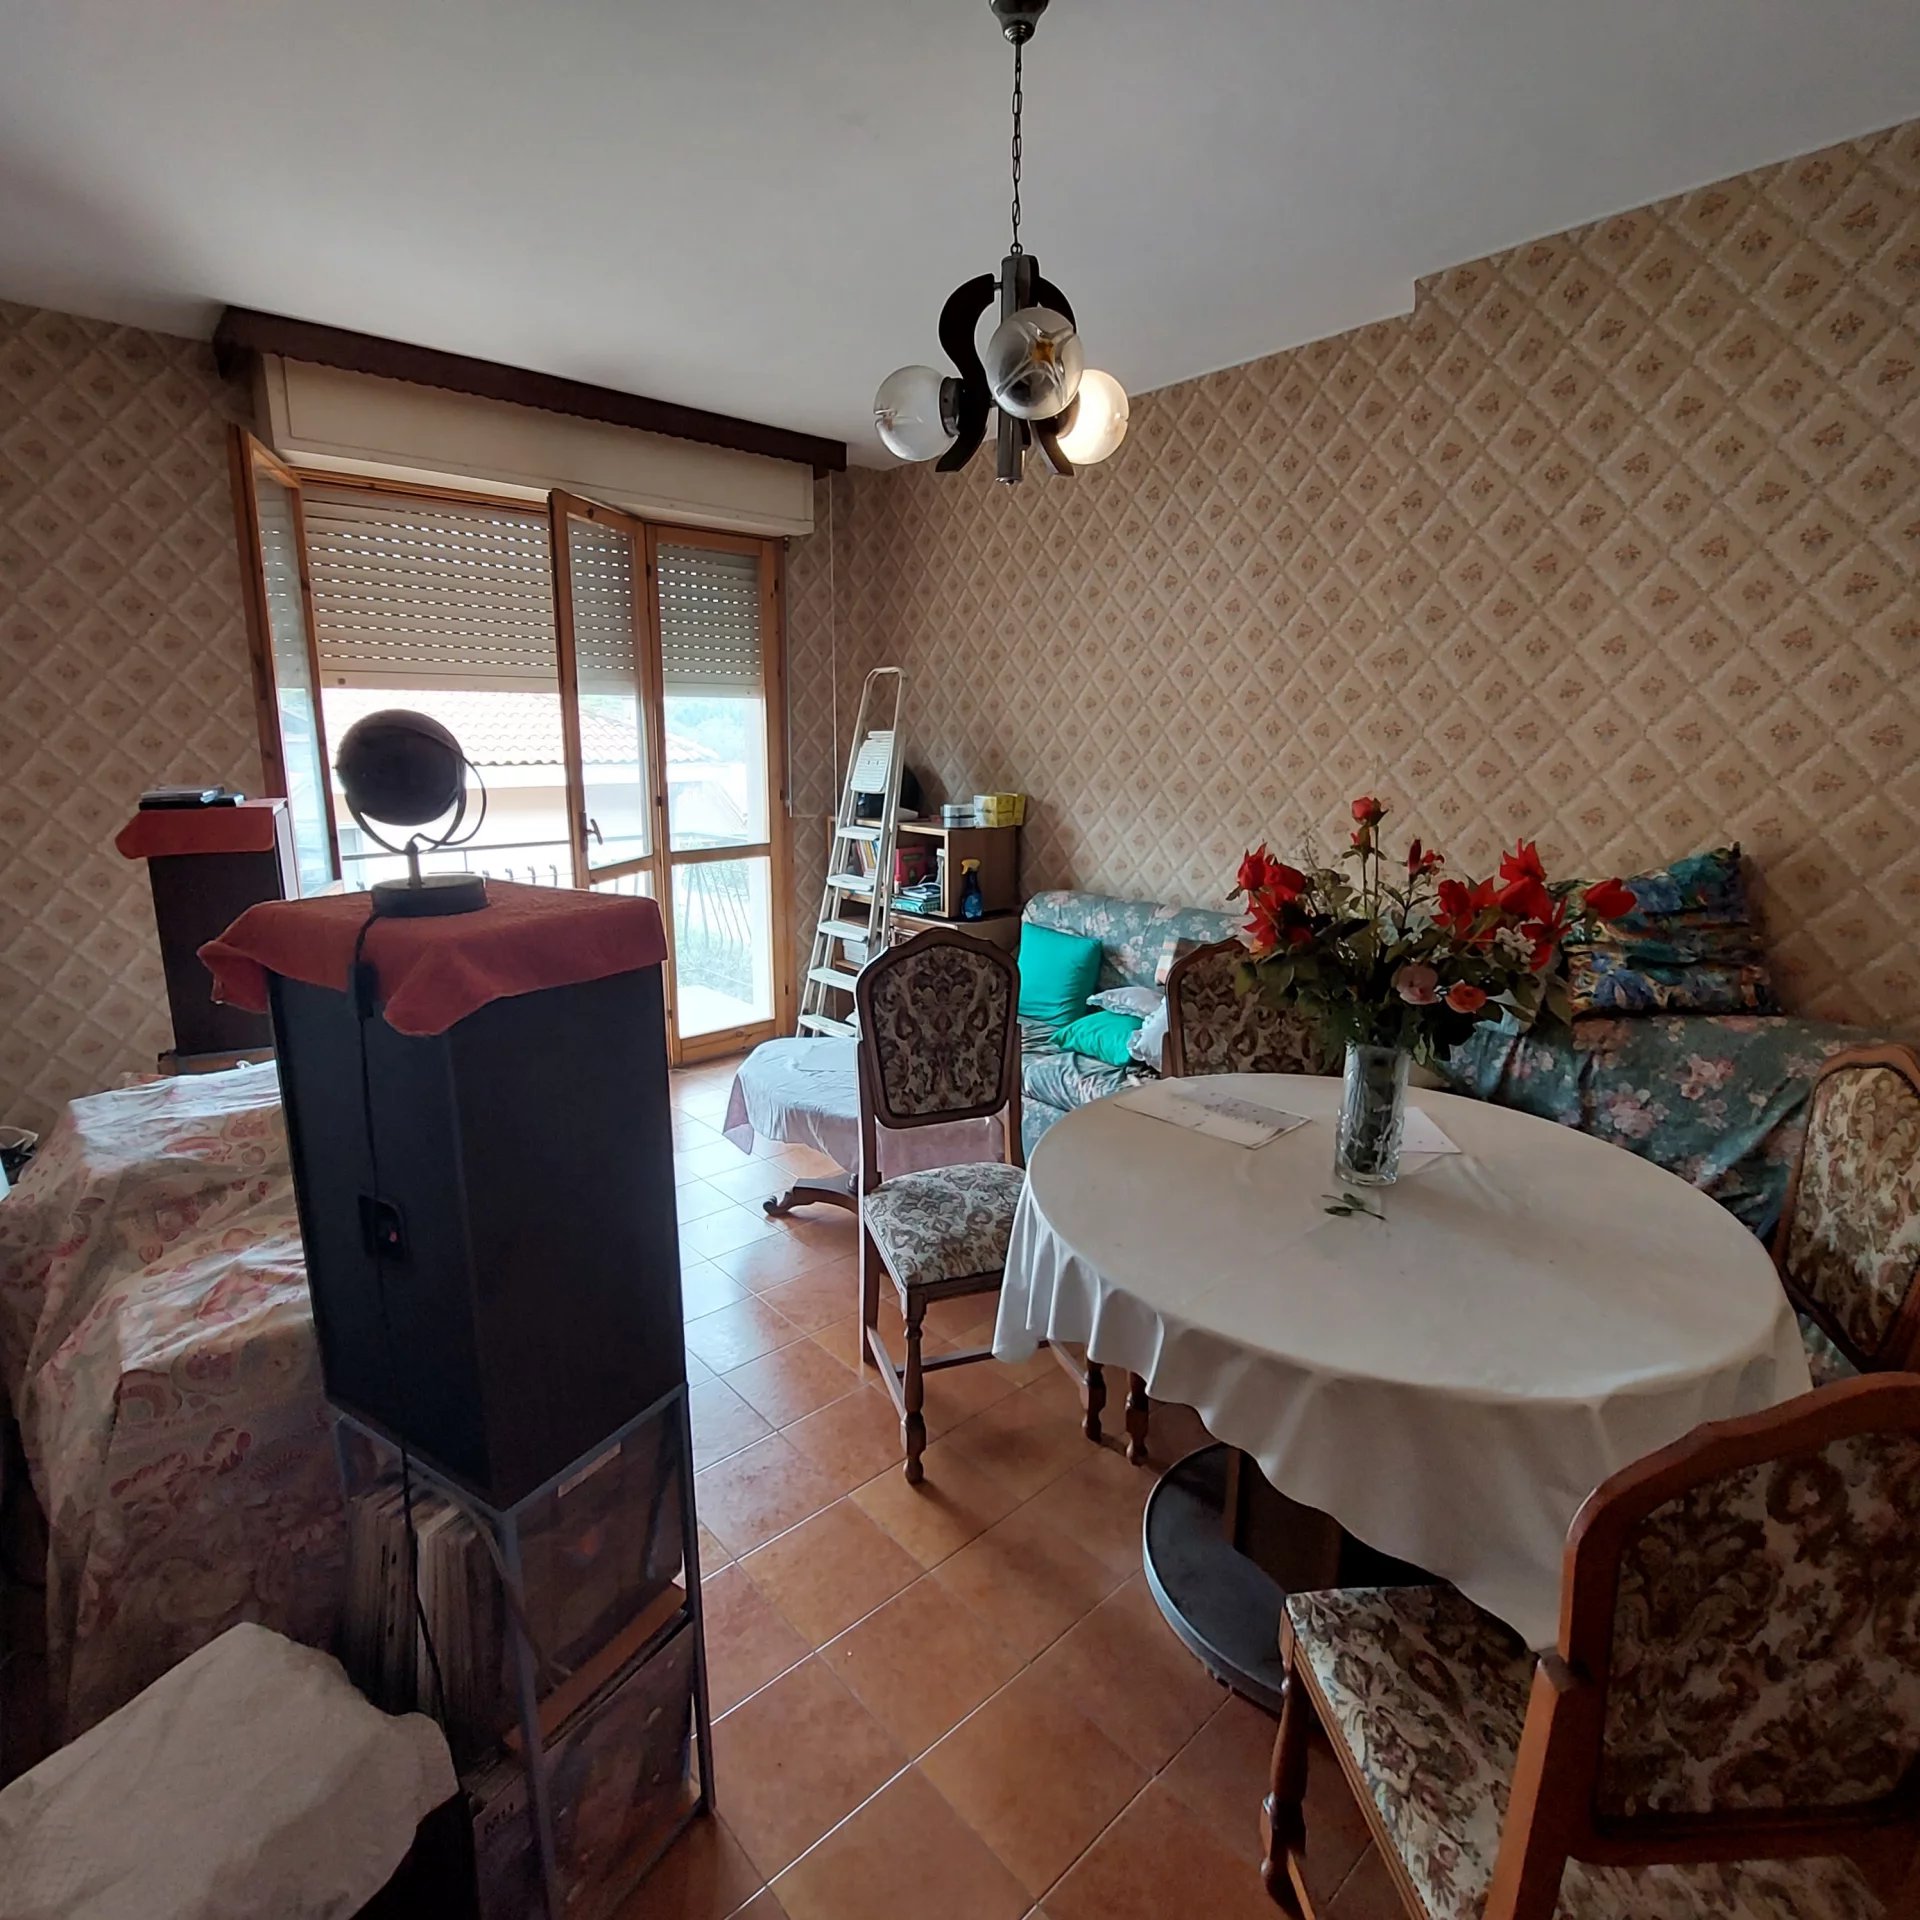 Sale Apartment - Bordighera Due Strade - Italy